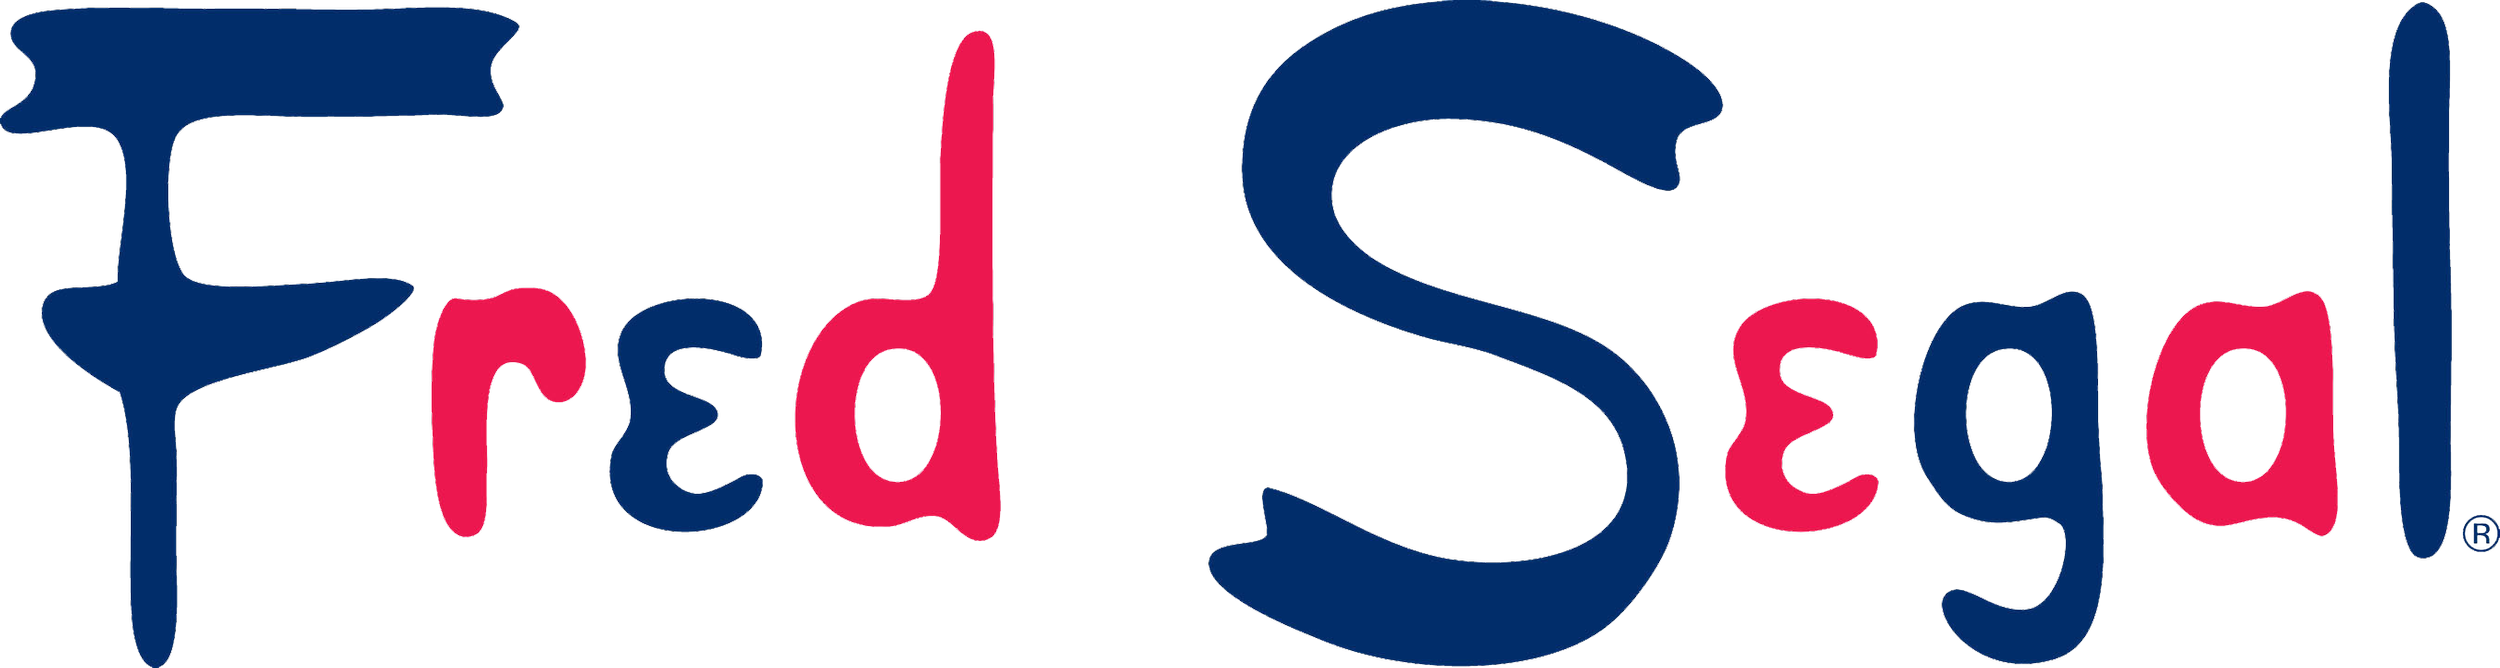 Fred-Segal-logo.png